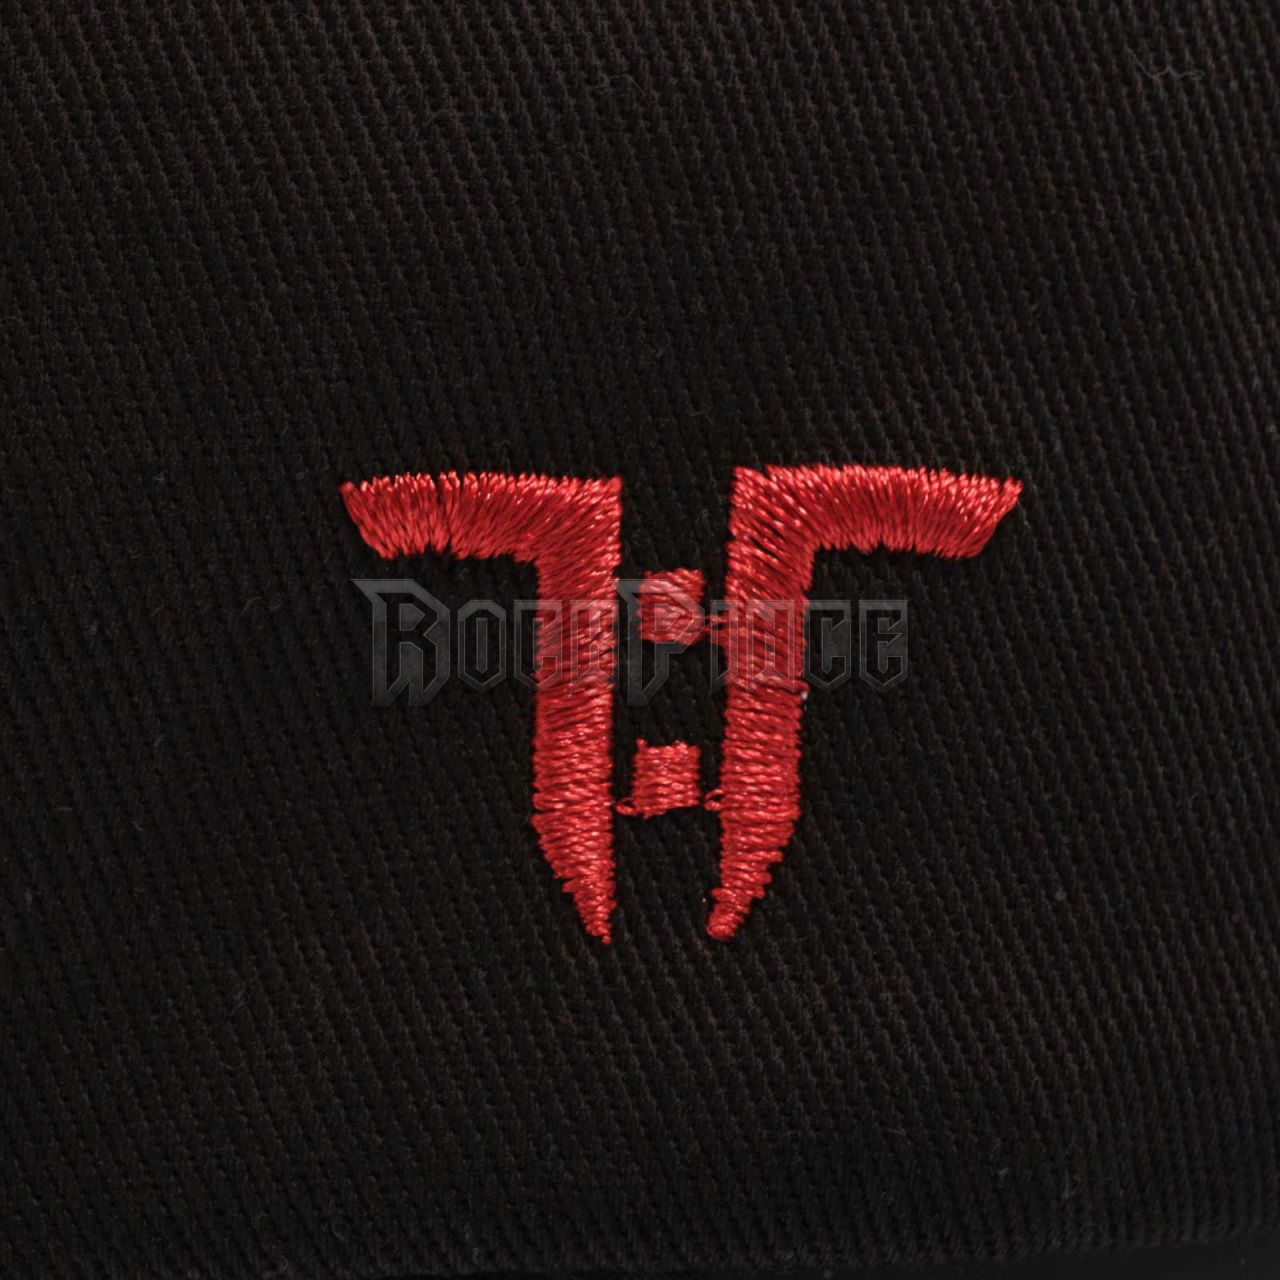 Tokyo Time - UFC Red Logo - snapback sapka - TOKYOSBCAP01B